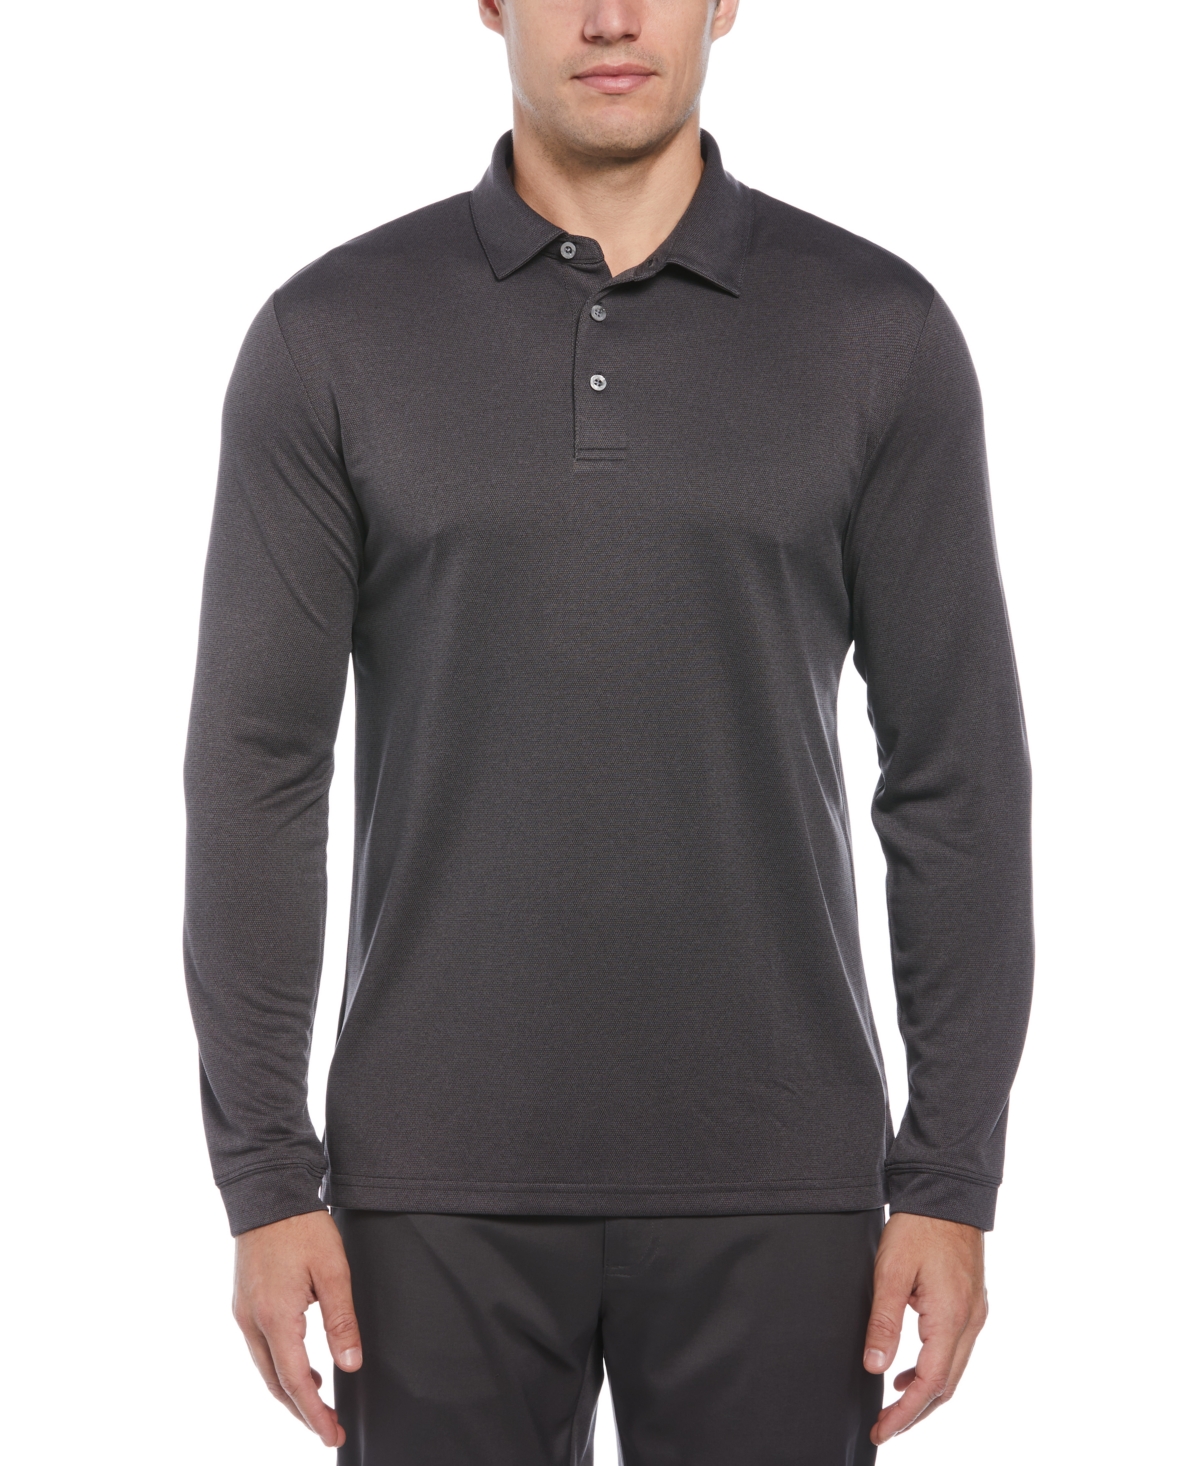 Men's Micro Birdseye Long Sleeve Golf Polo Shirt - Seaport Heather